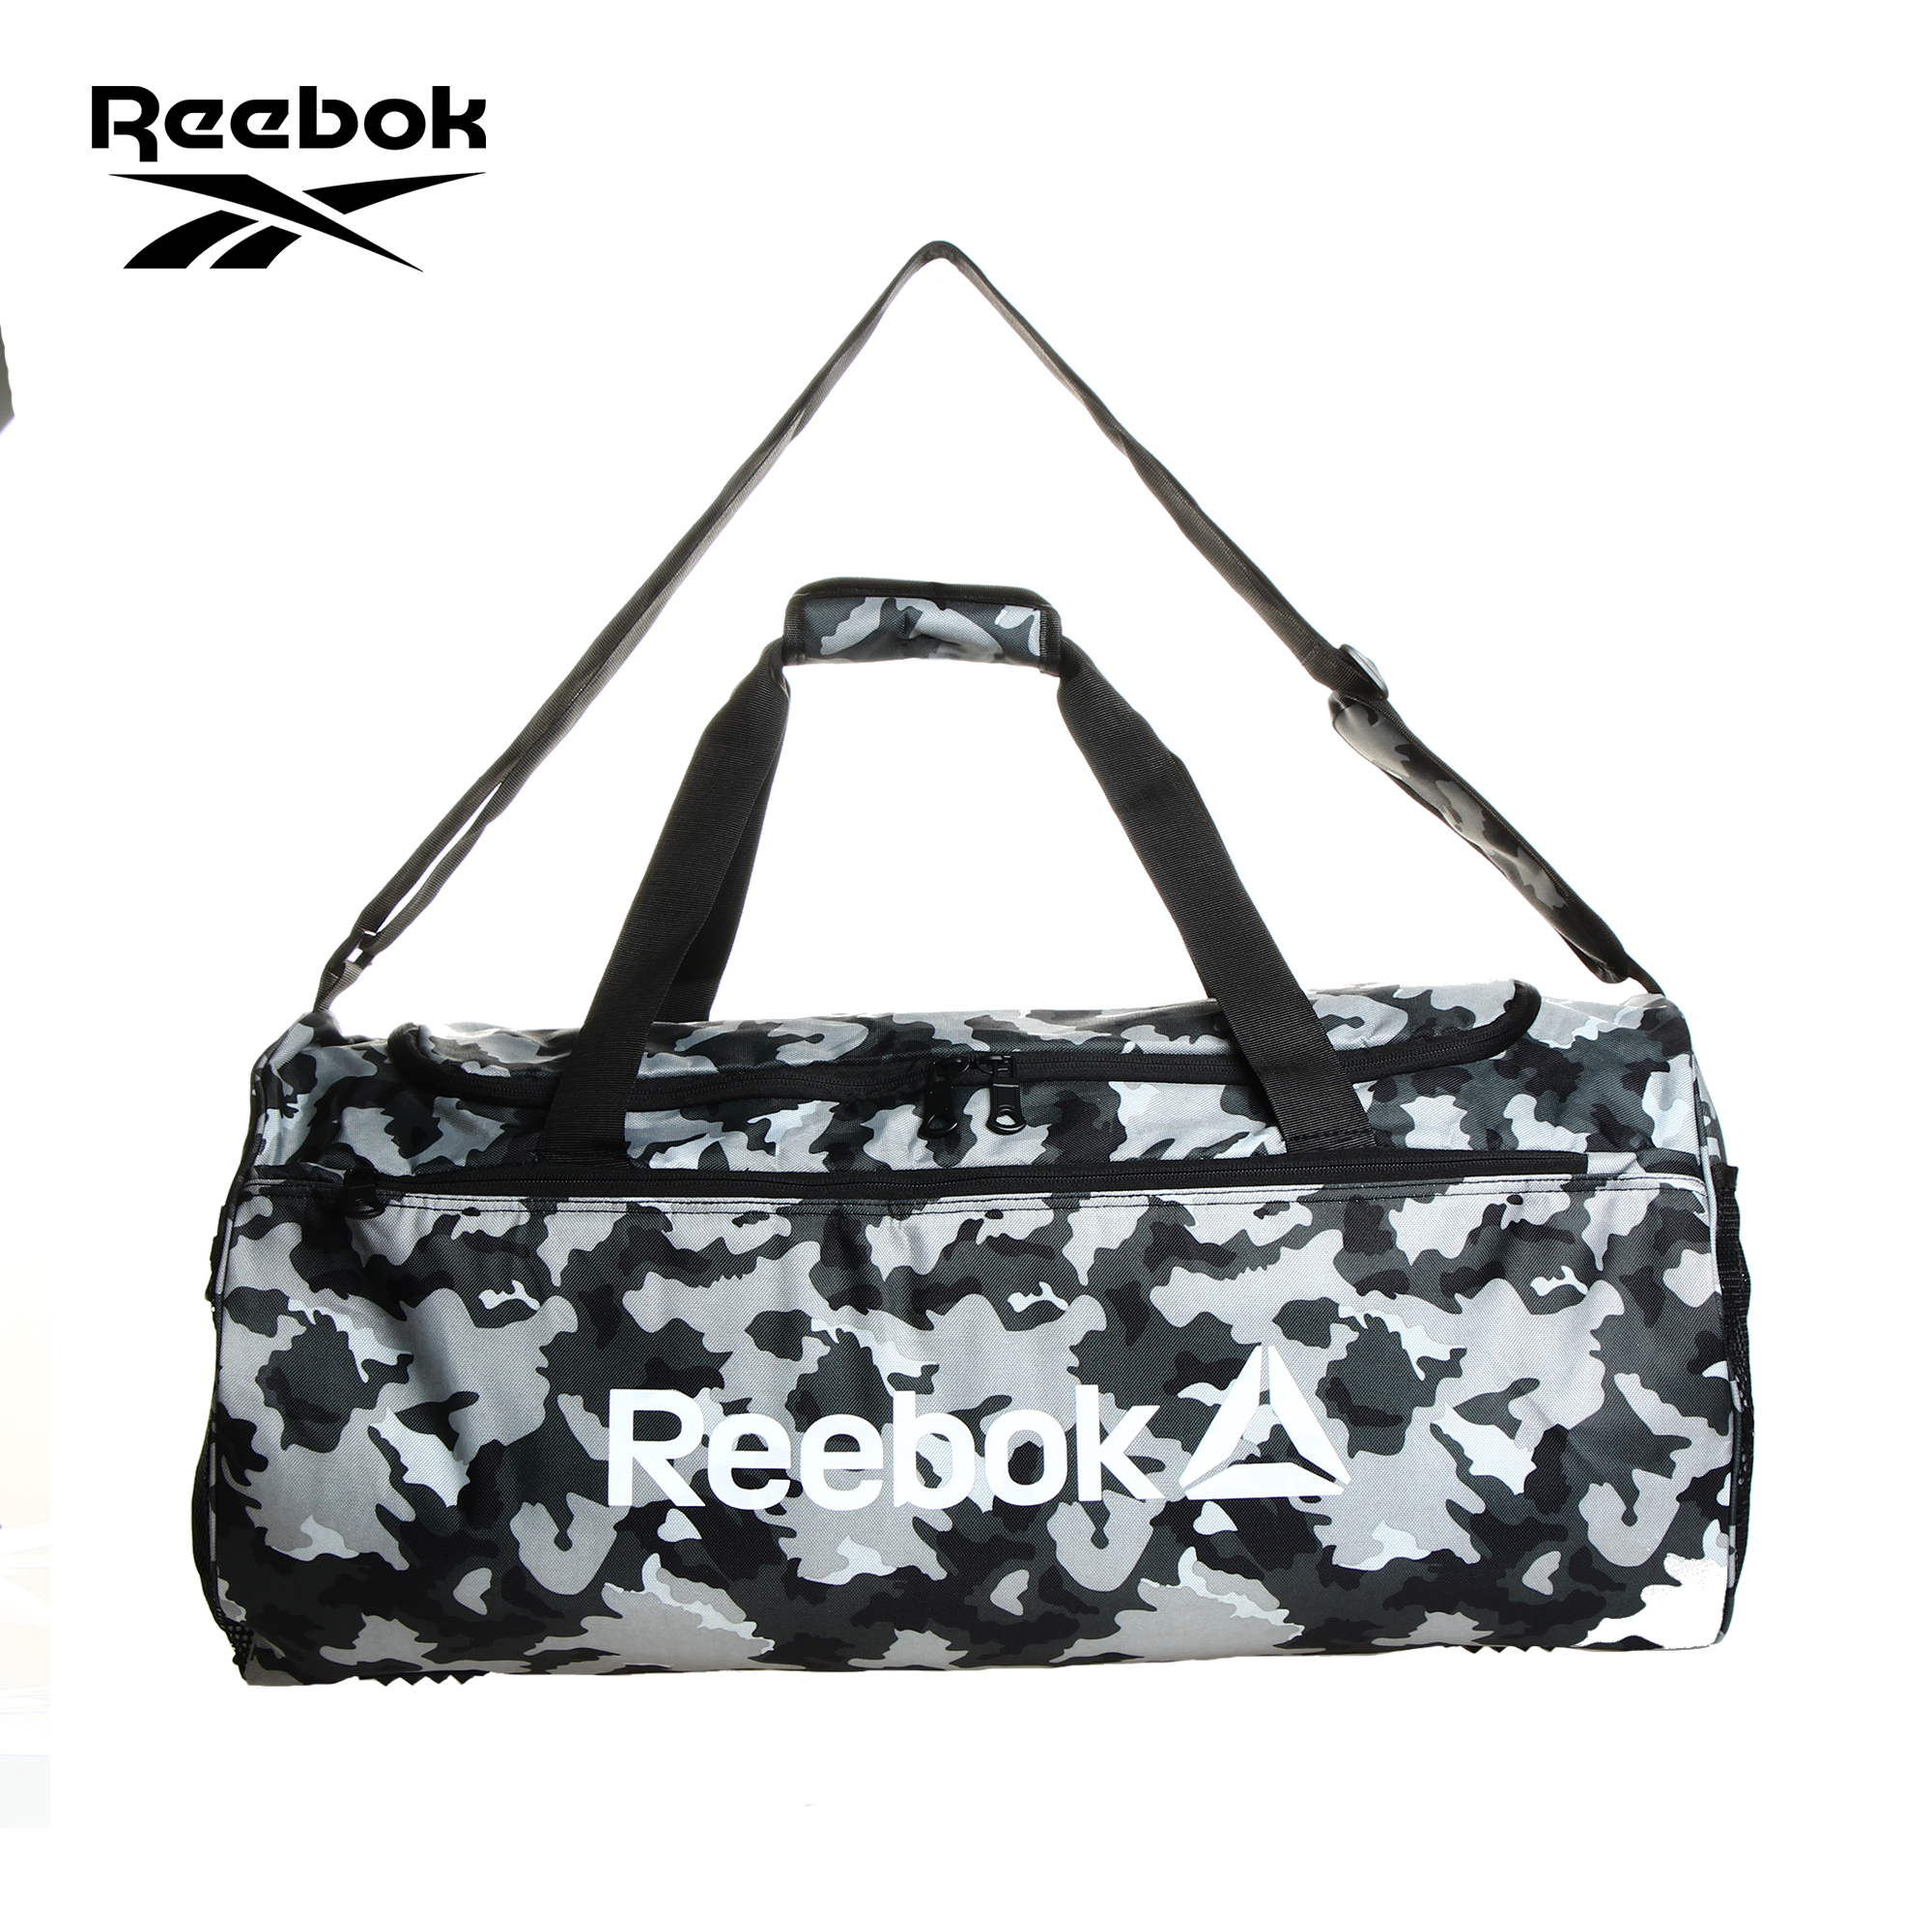 reebok bag price philippines